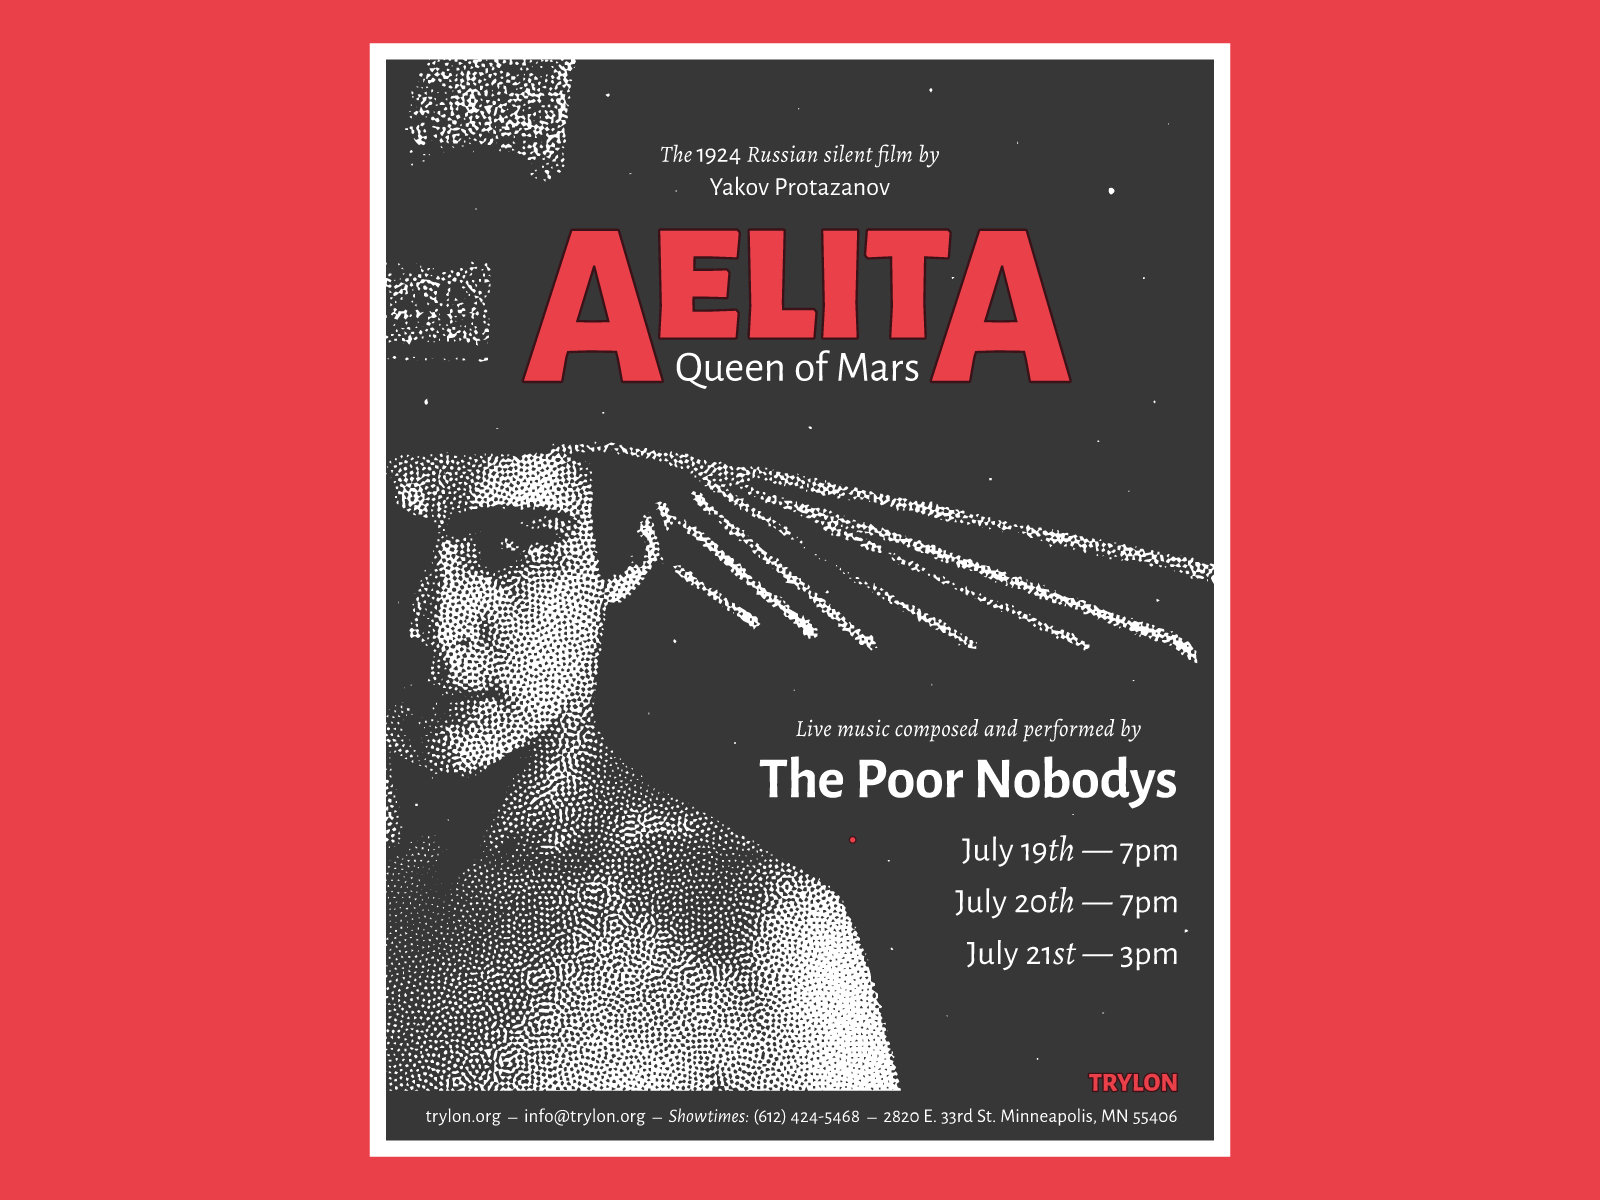 The Poor Nobodys X Aelita aelita deco film gig gig poster movie music poor nobodys poster russian sci-fi show space